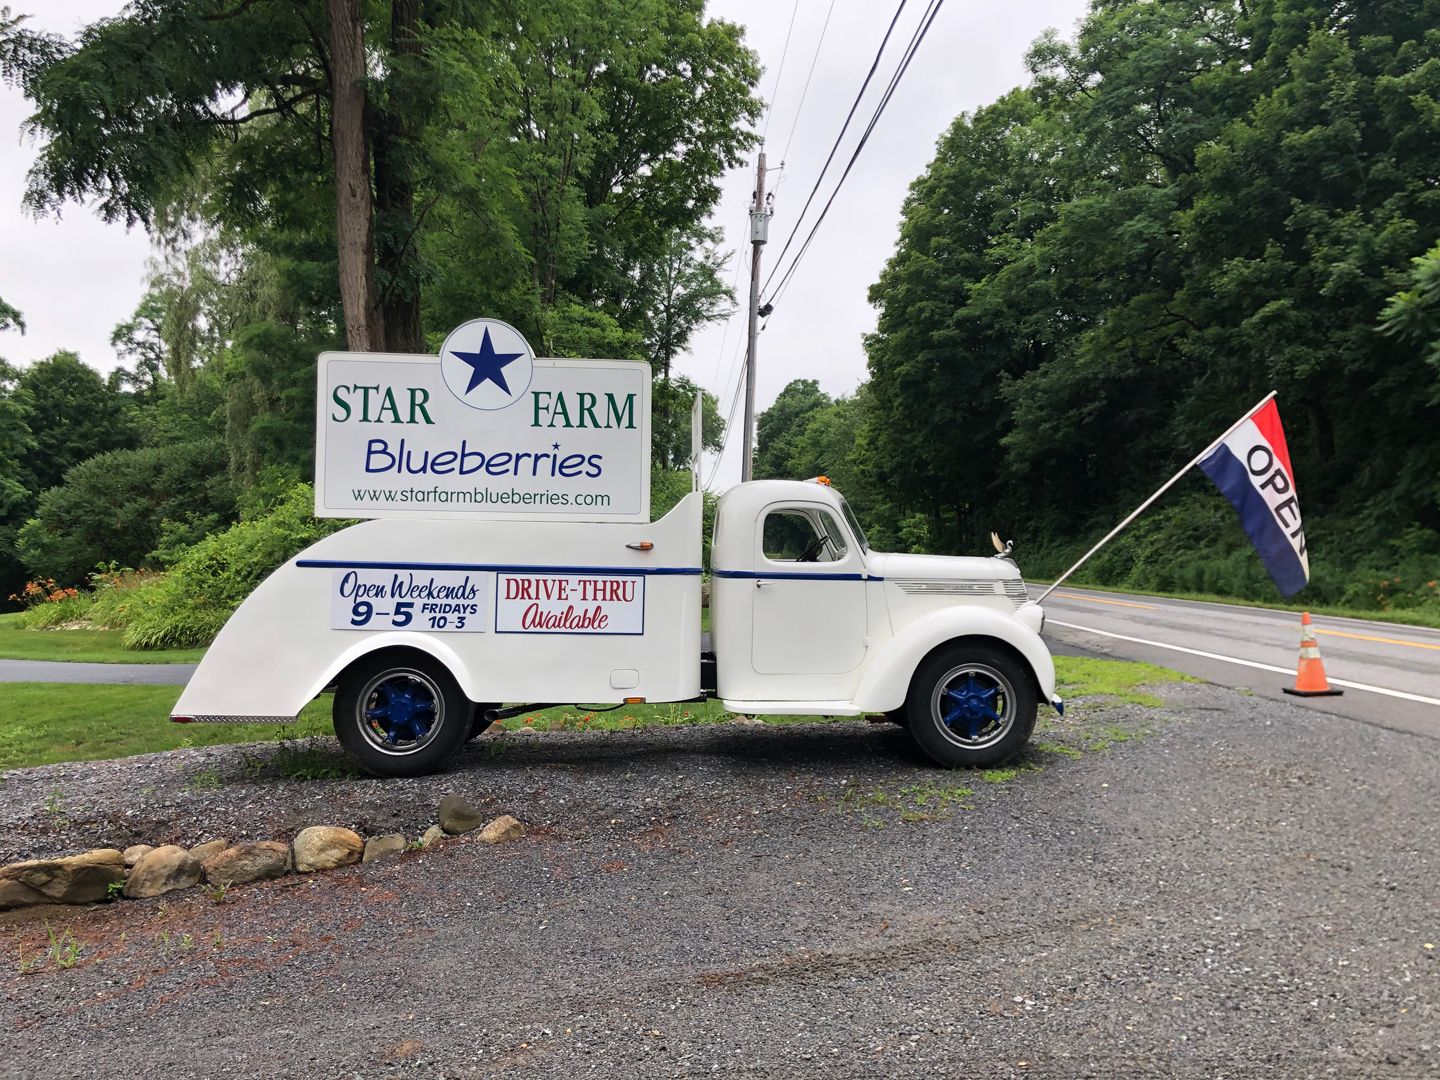 Star Farm’s beautifully restored 1937 International D-50 vintage truck greets visitors.